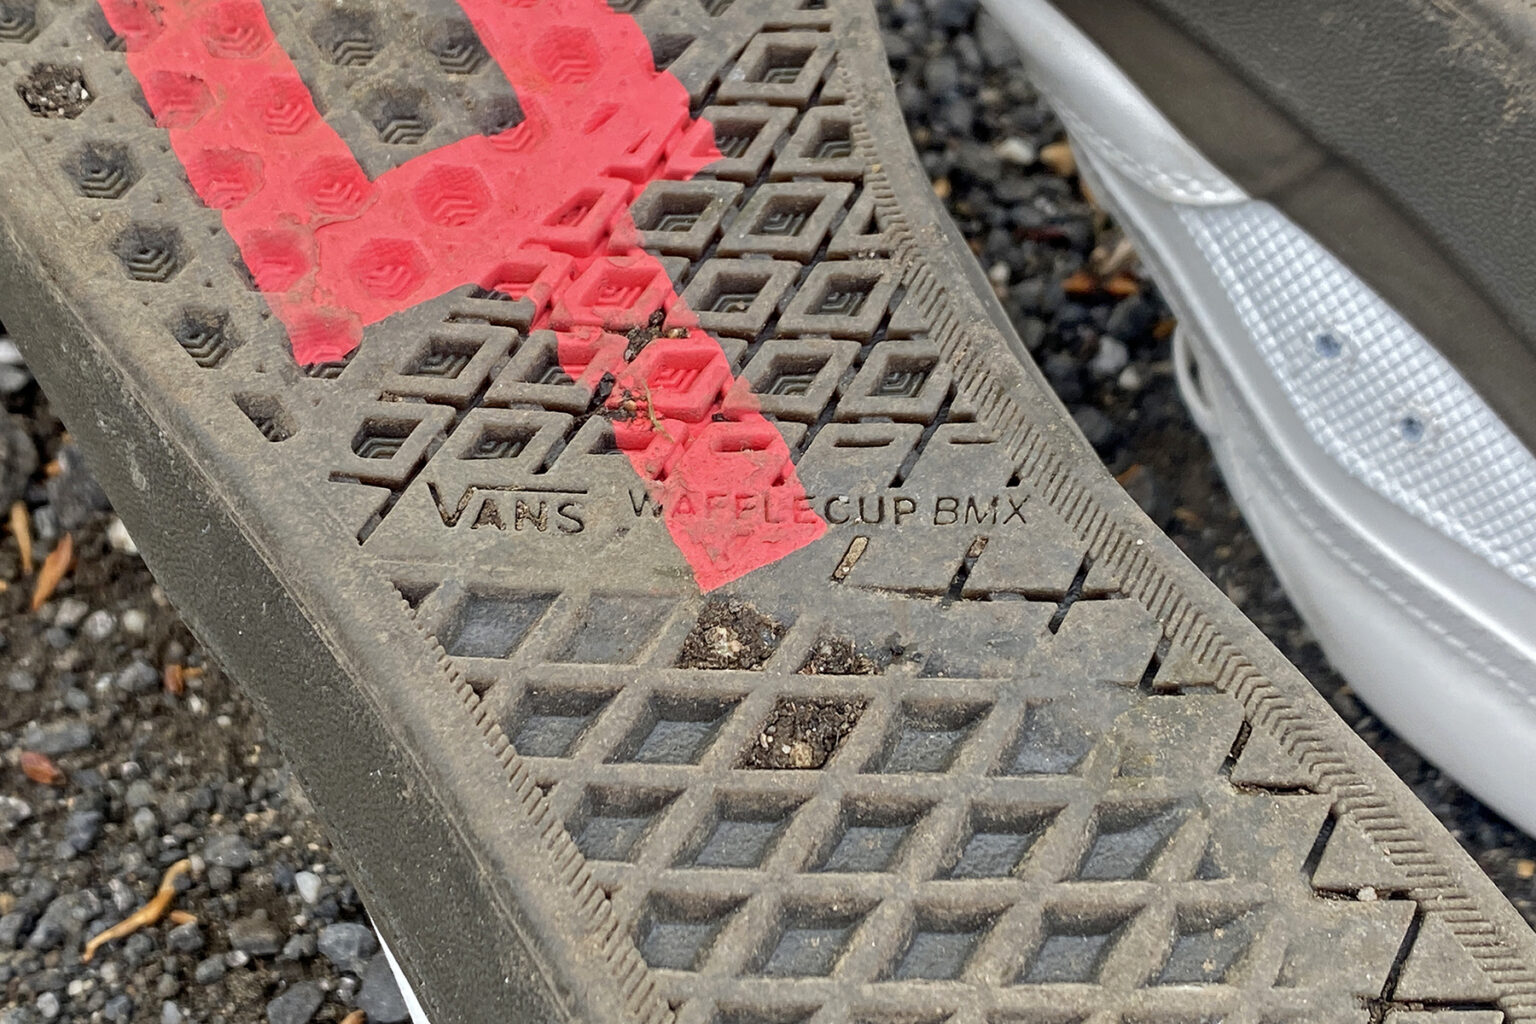 YT x Vans Live Uncaged Off The Wall limited edition shoe collaboration, BMX 114 shoes WaffleCup BMX sole